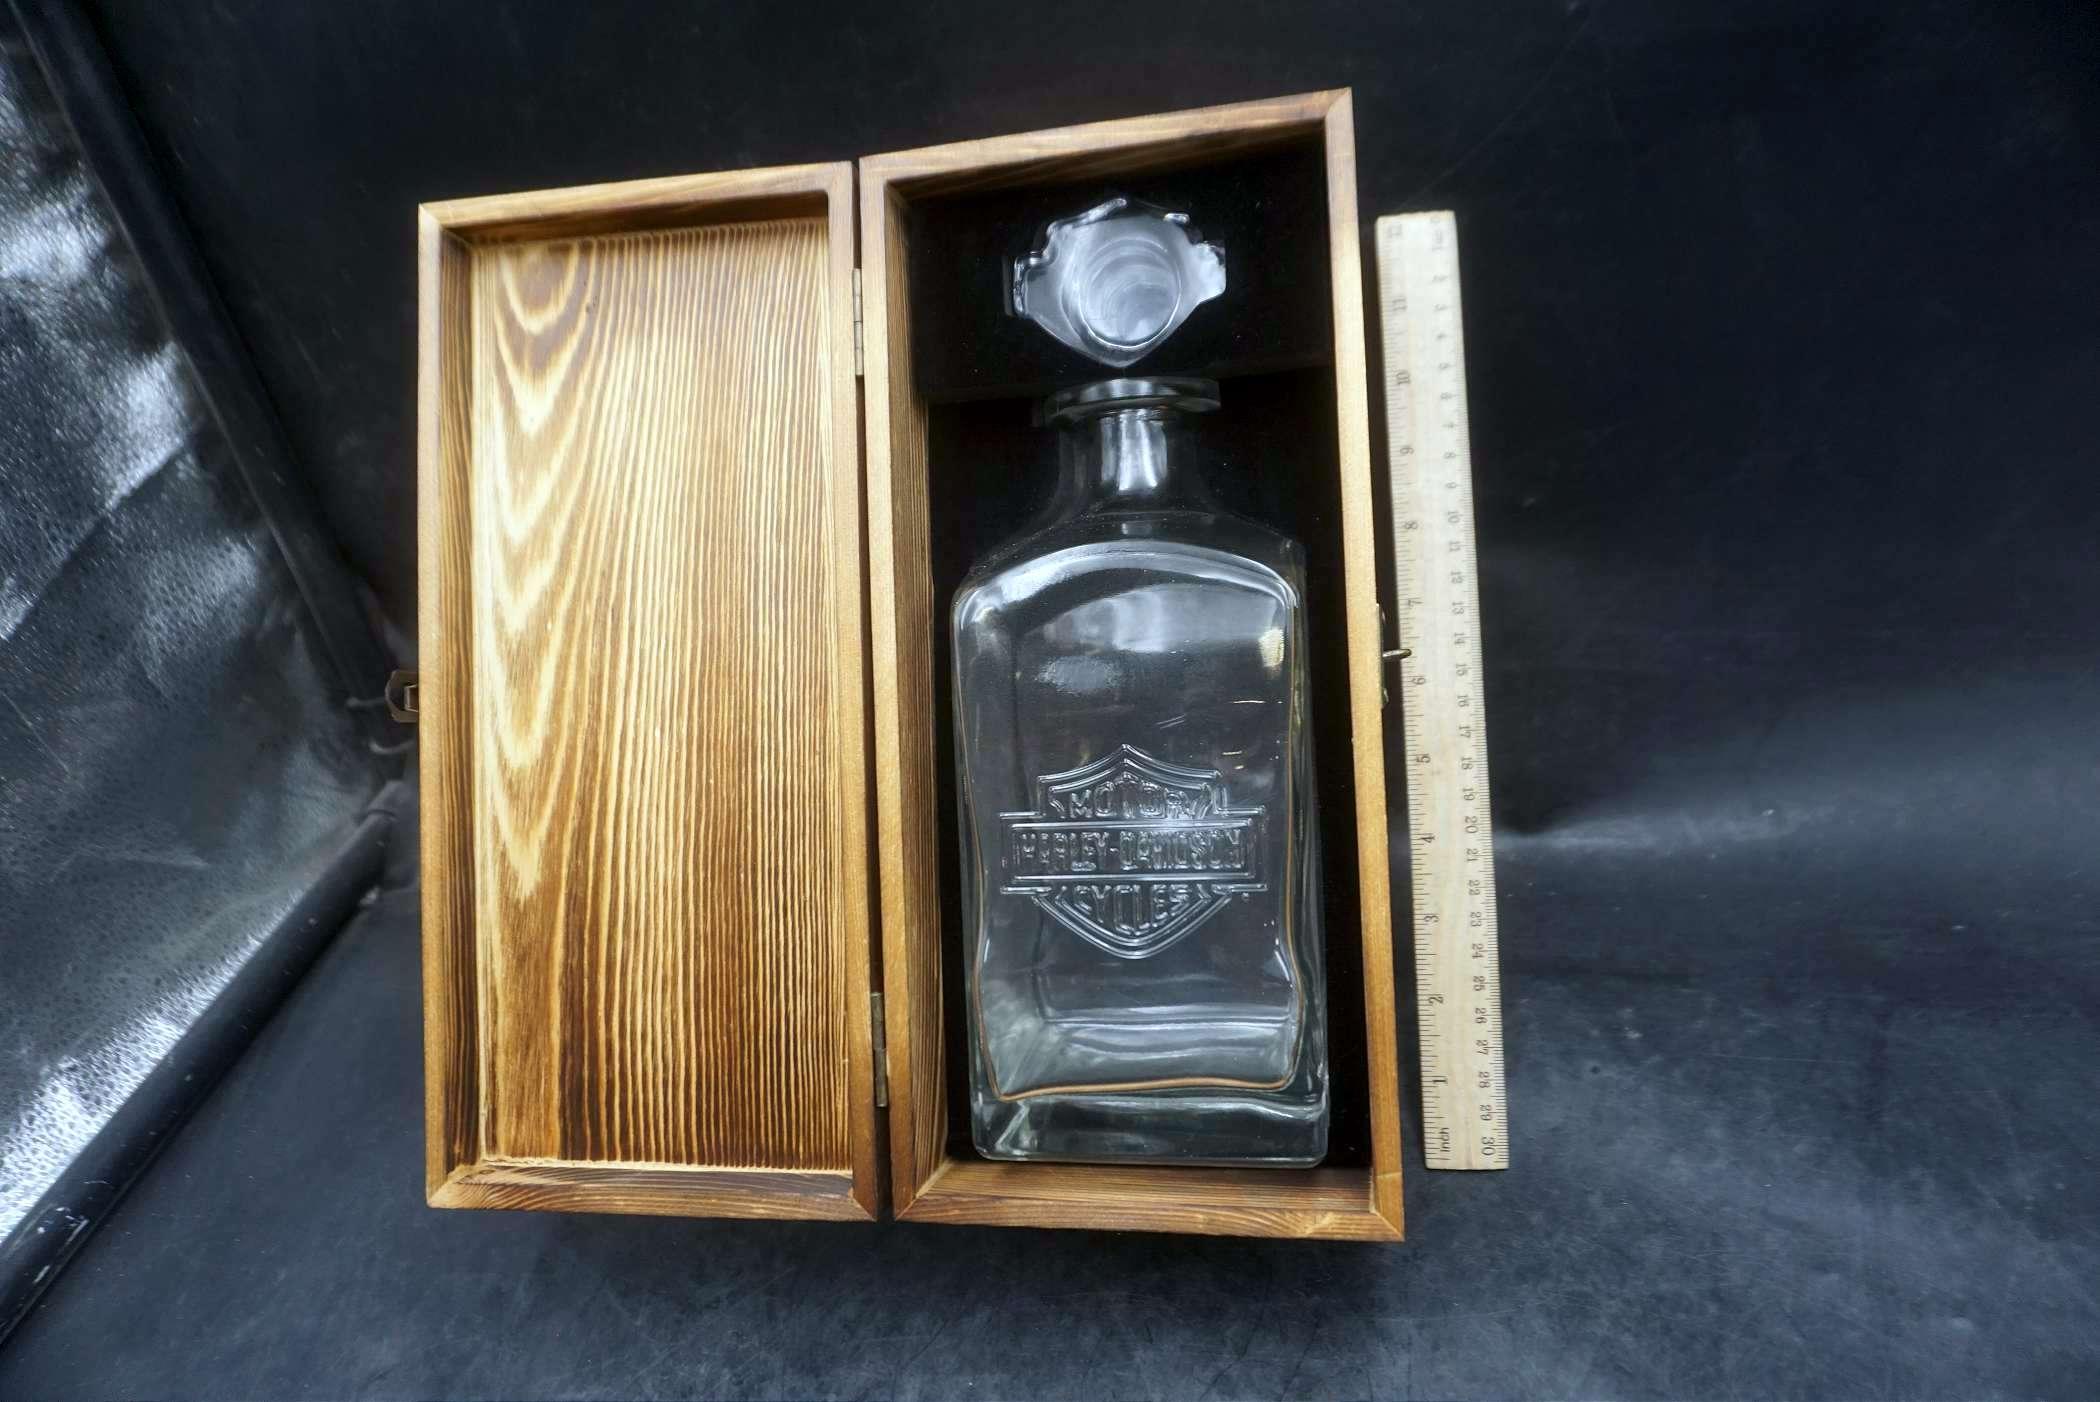 Harley-Davidson Glass Liquor Decanter Bottle In Wooden Case - J.L. Sioux Falls, S.D.